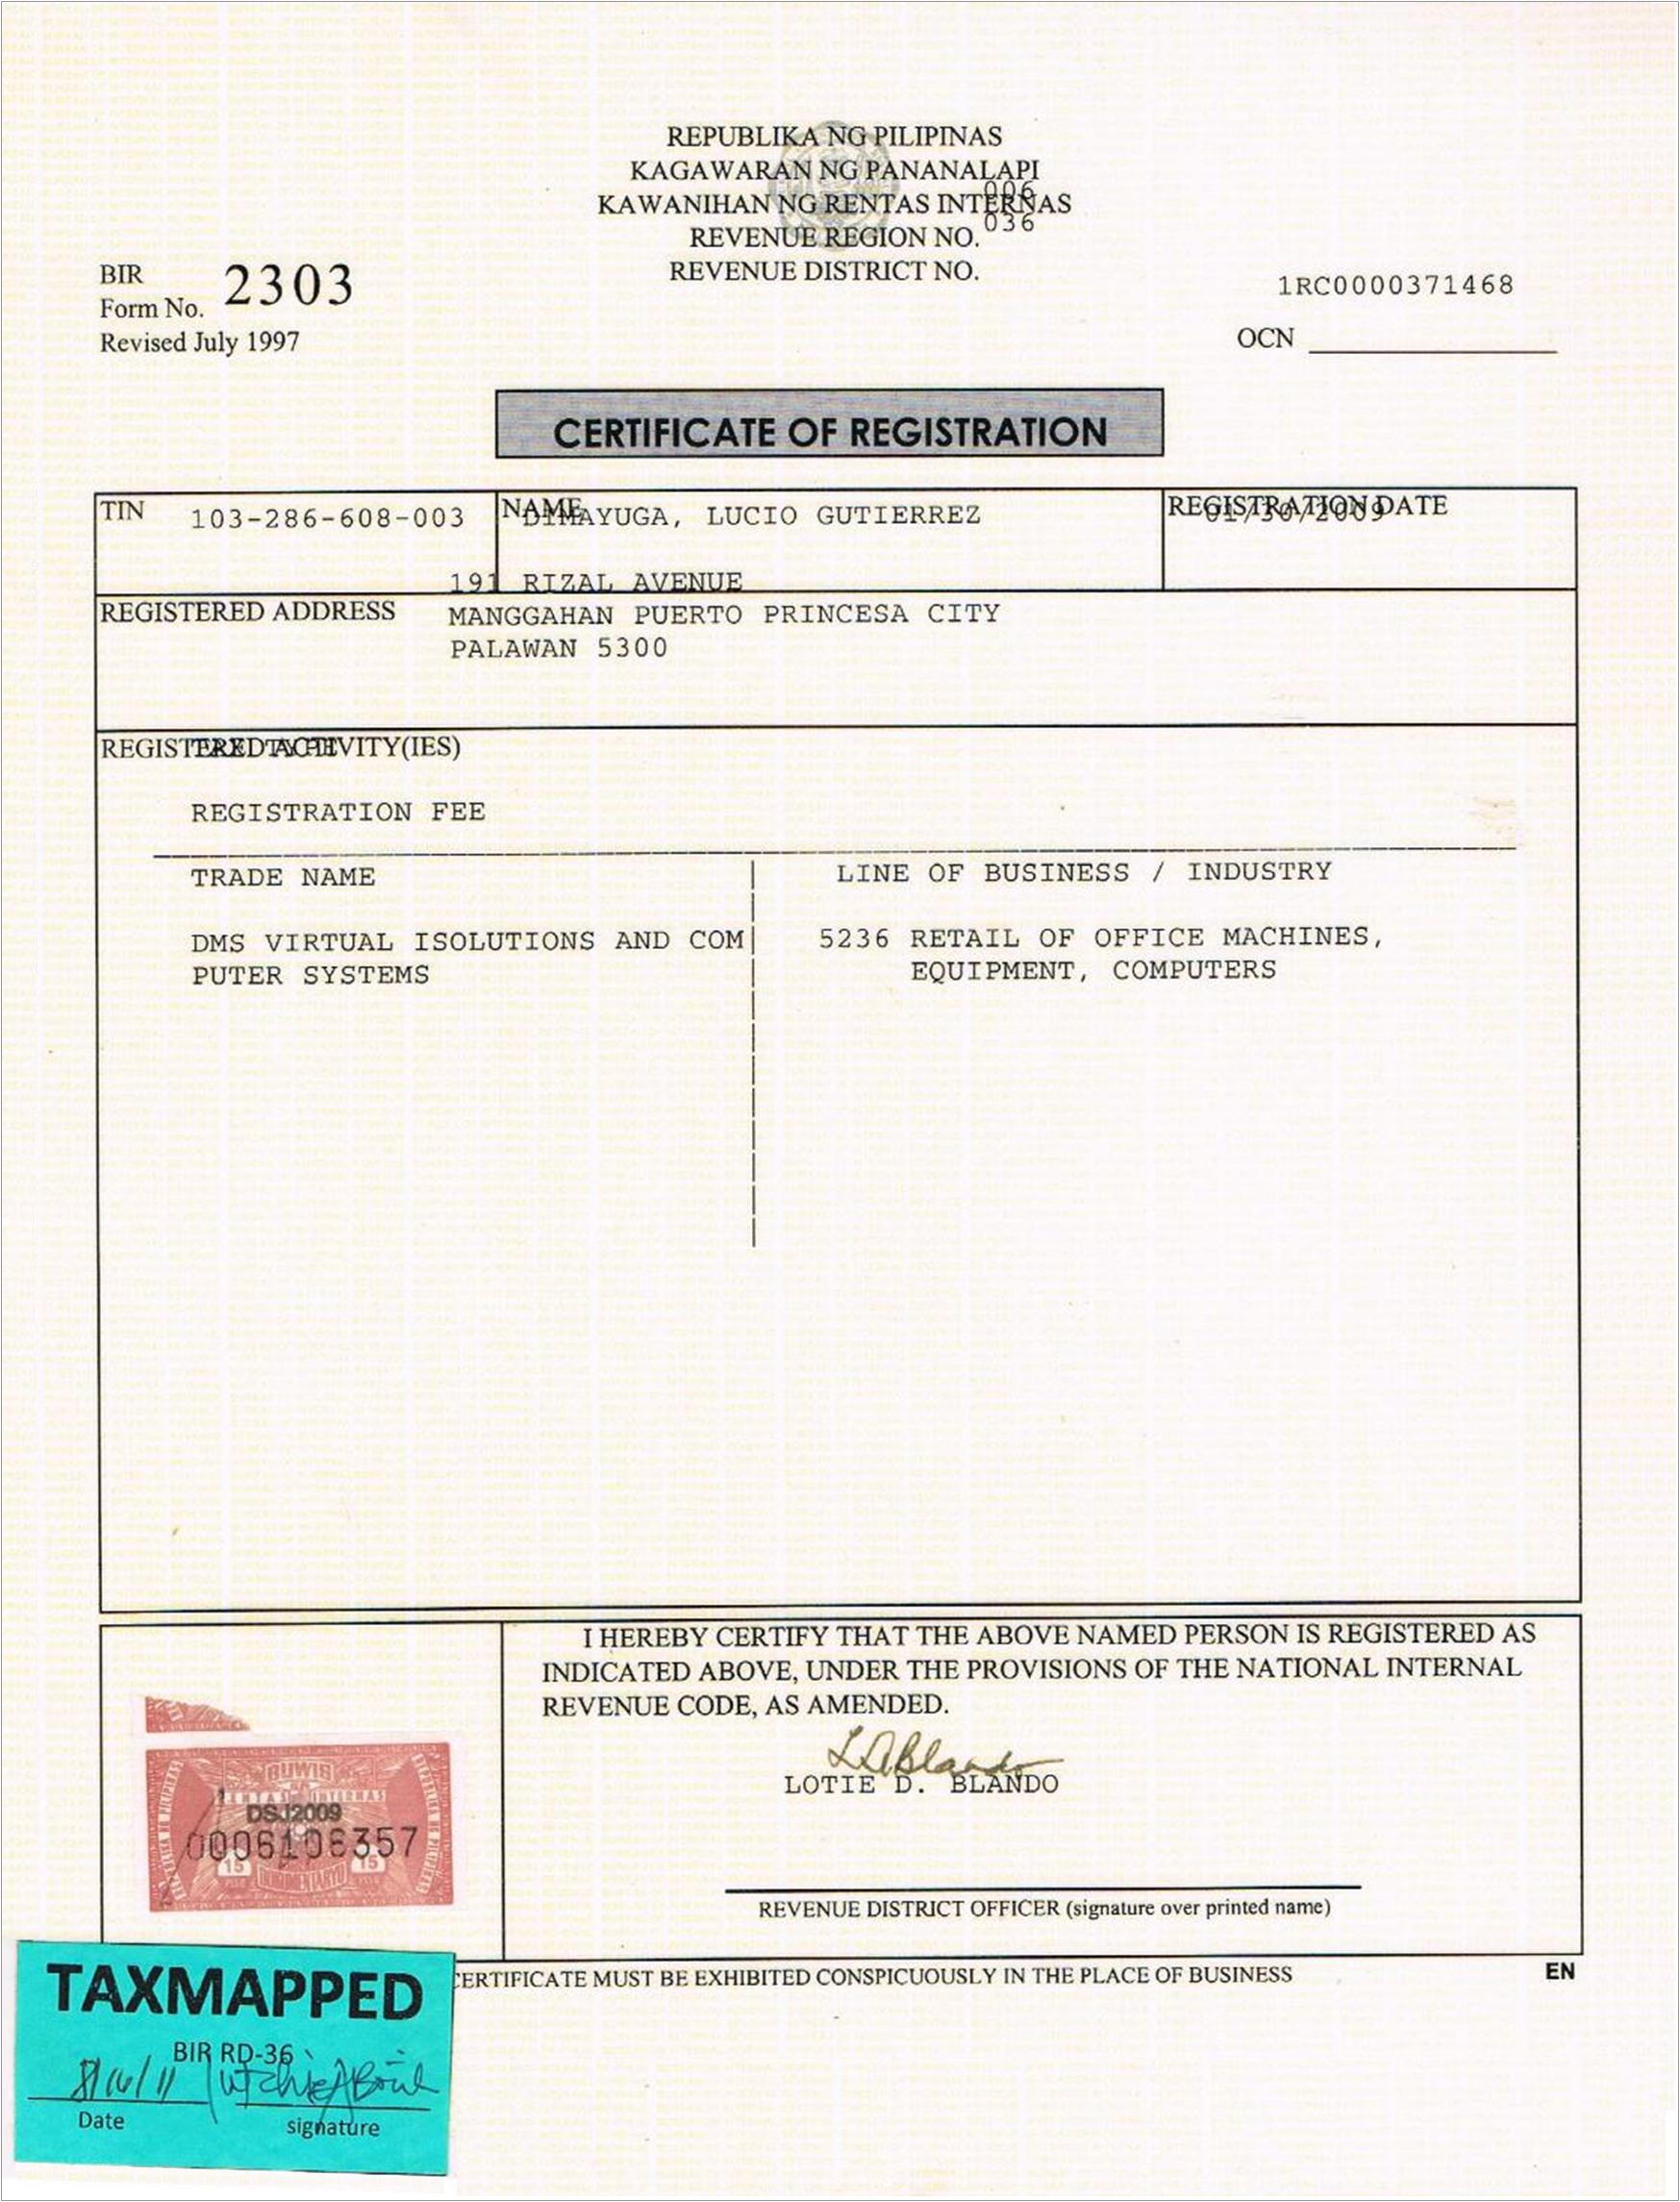 BIR Form 2303 Certificate of Registration